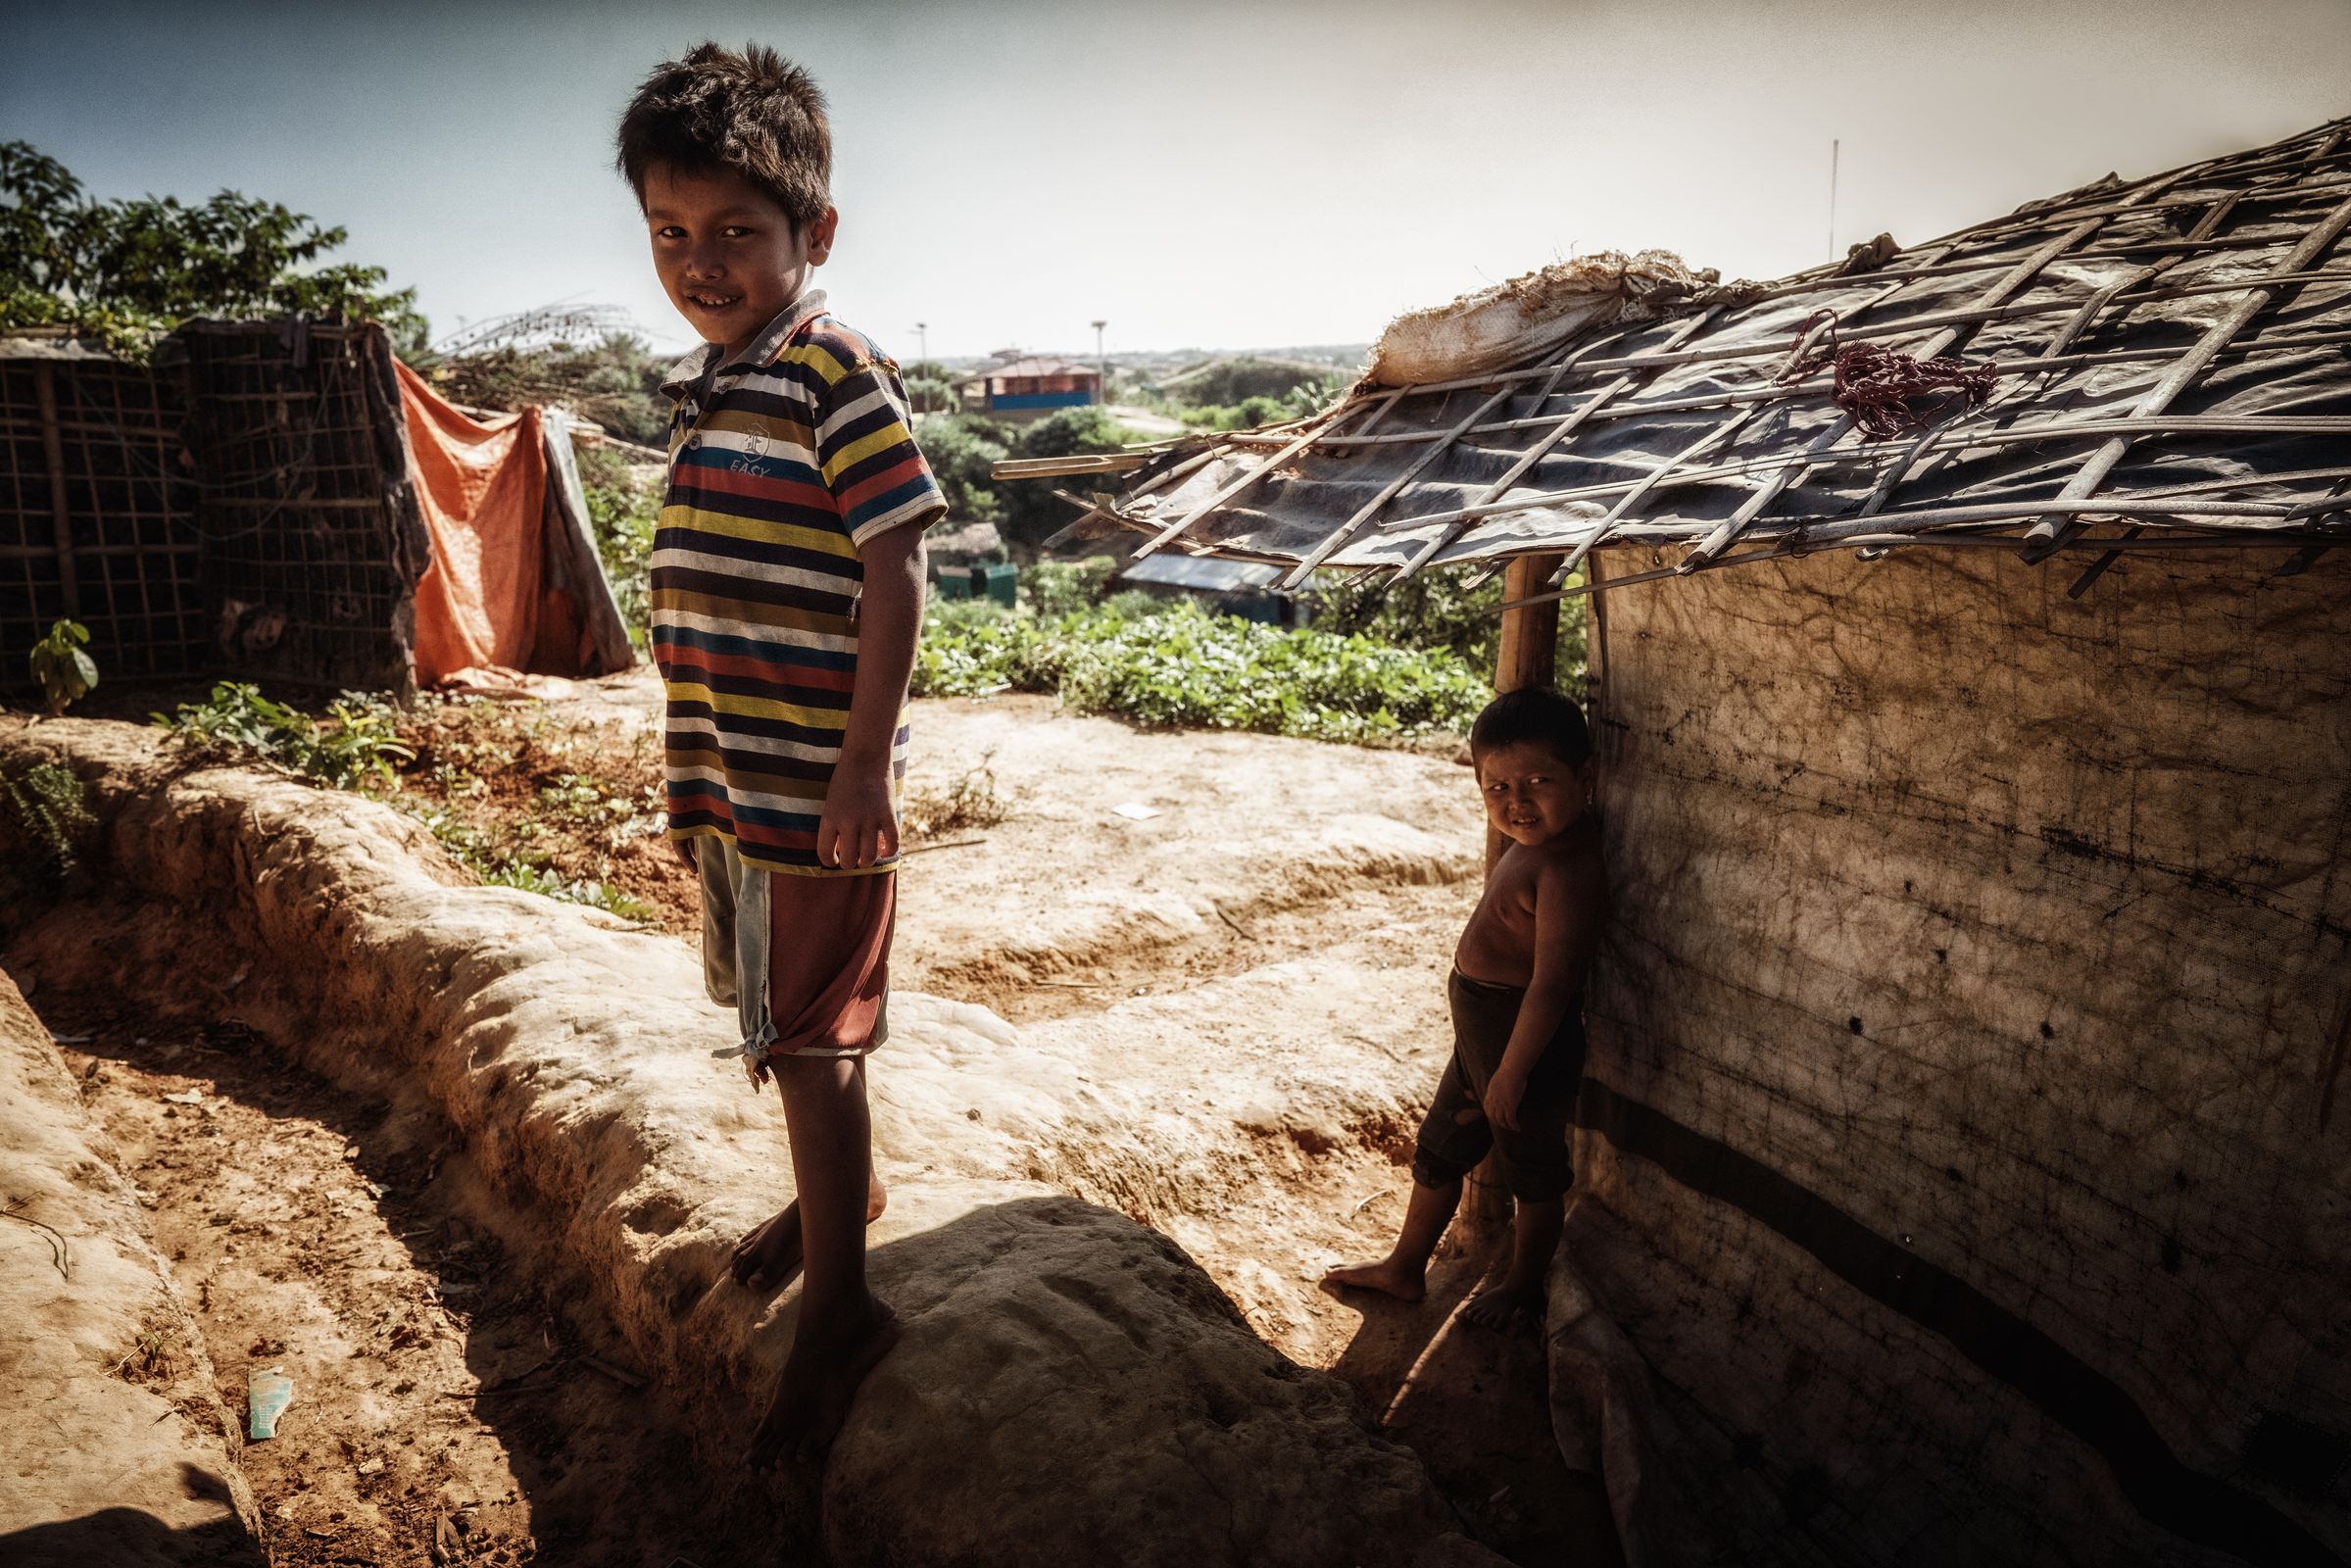 Rekordsumme gespendet: Die Kinder der Rohingya sagen danke